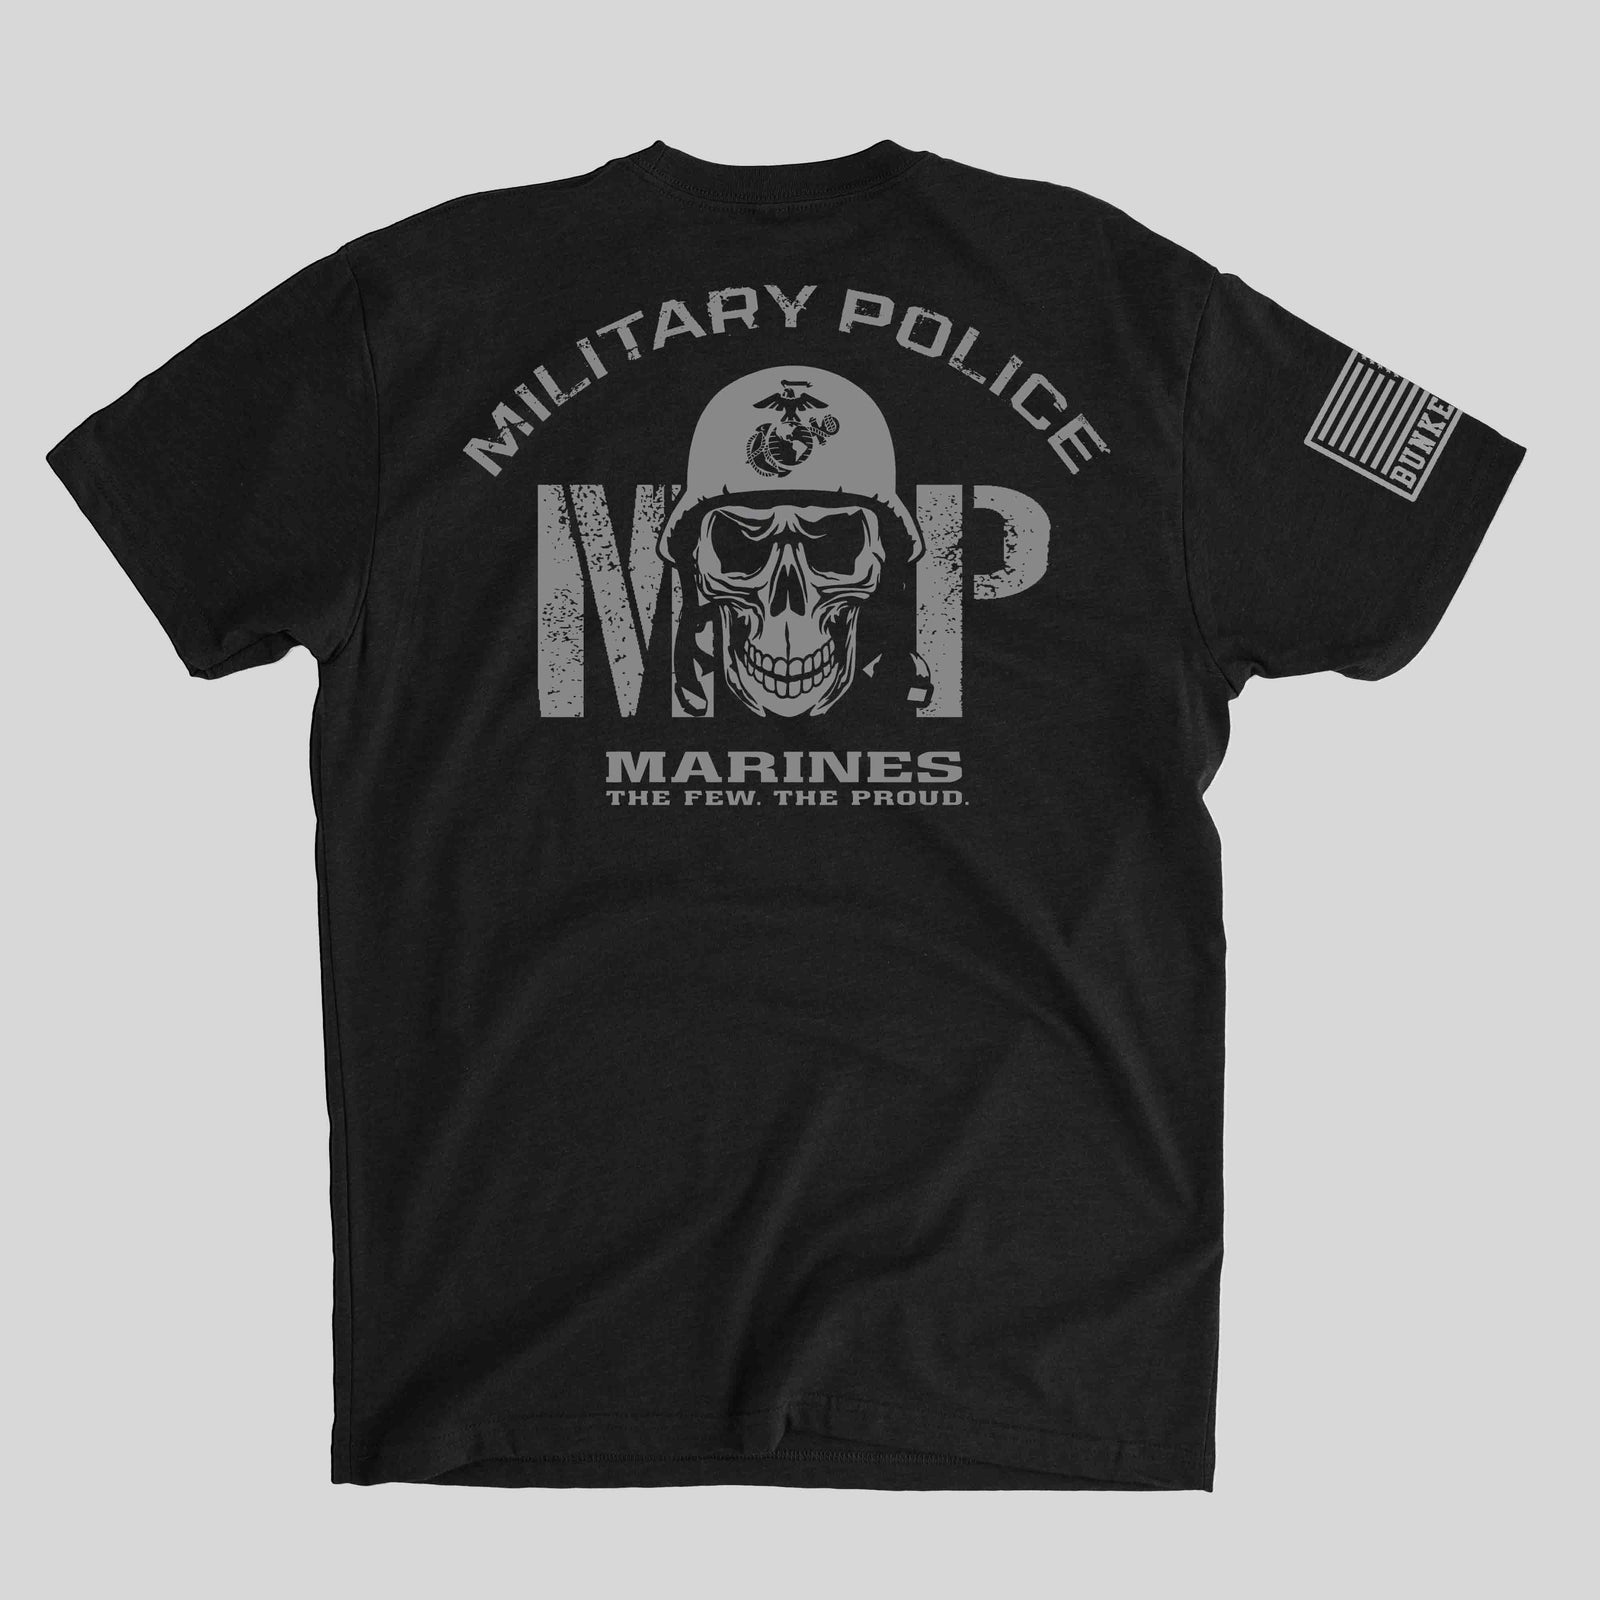 Military Police - Marines